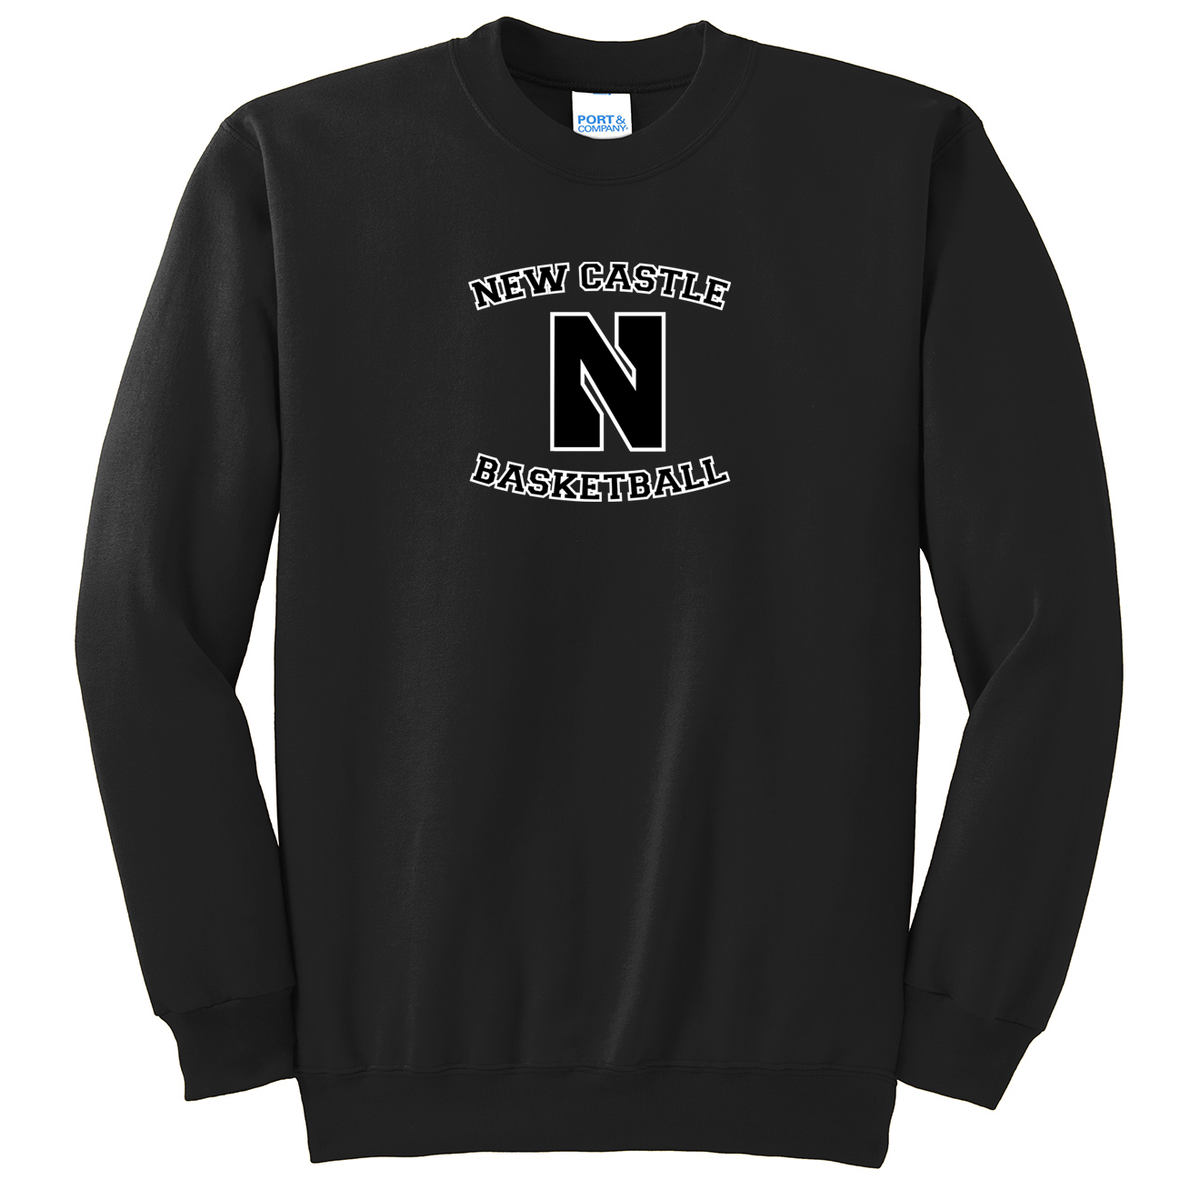 New Castle Basketball Crew Neck Sweater